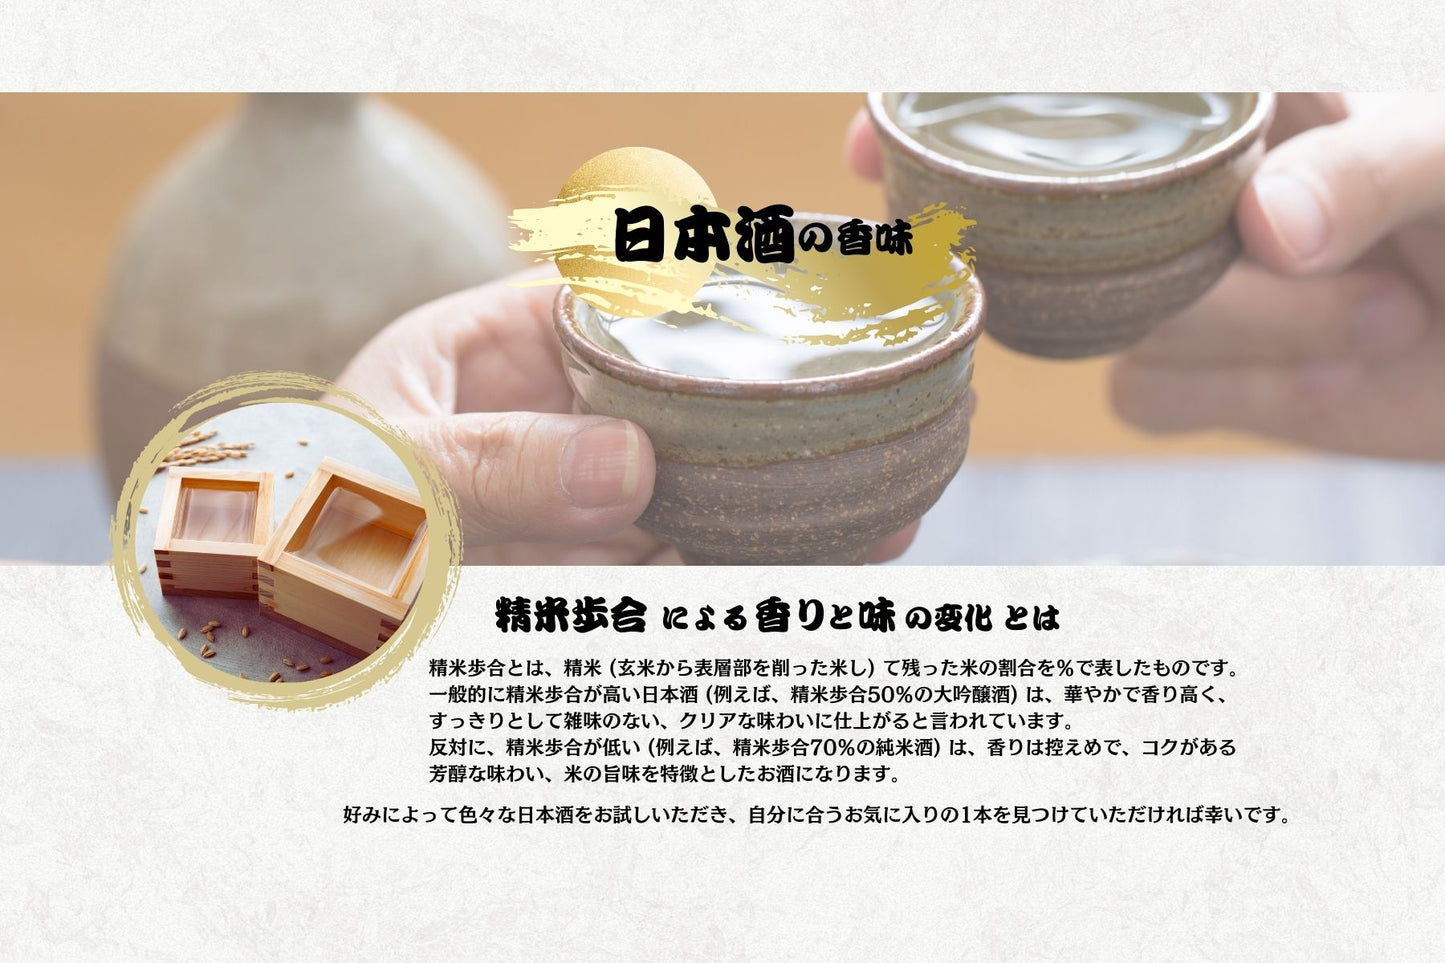 Suigei Special Pure Rice Sake 720ml (52009)